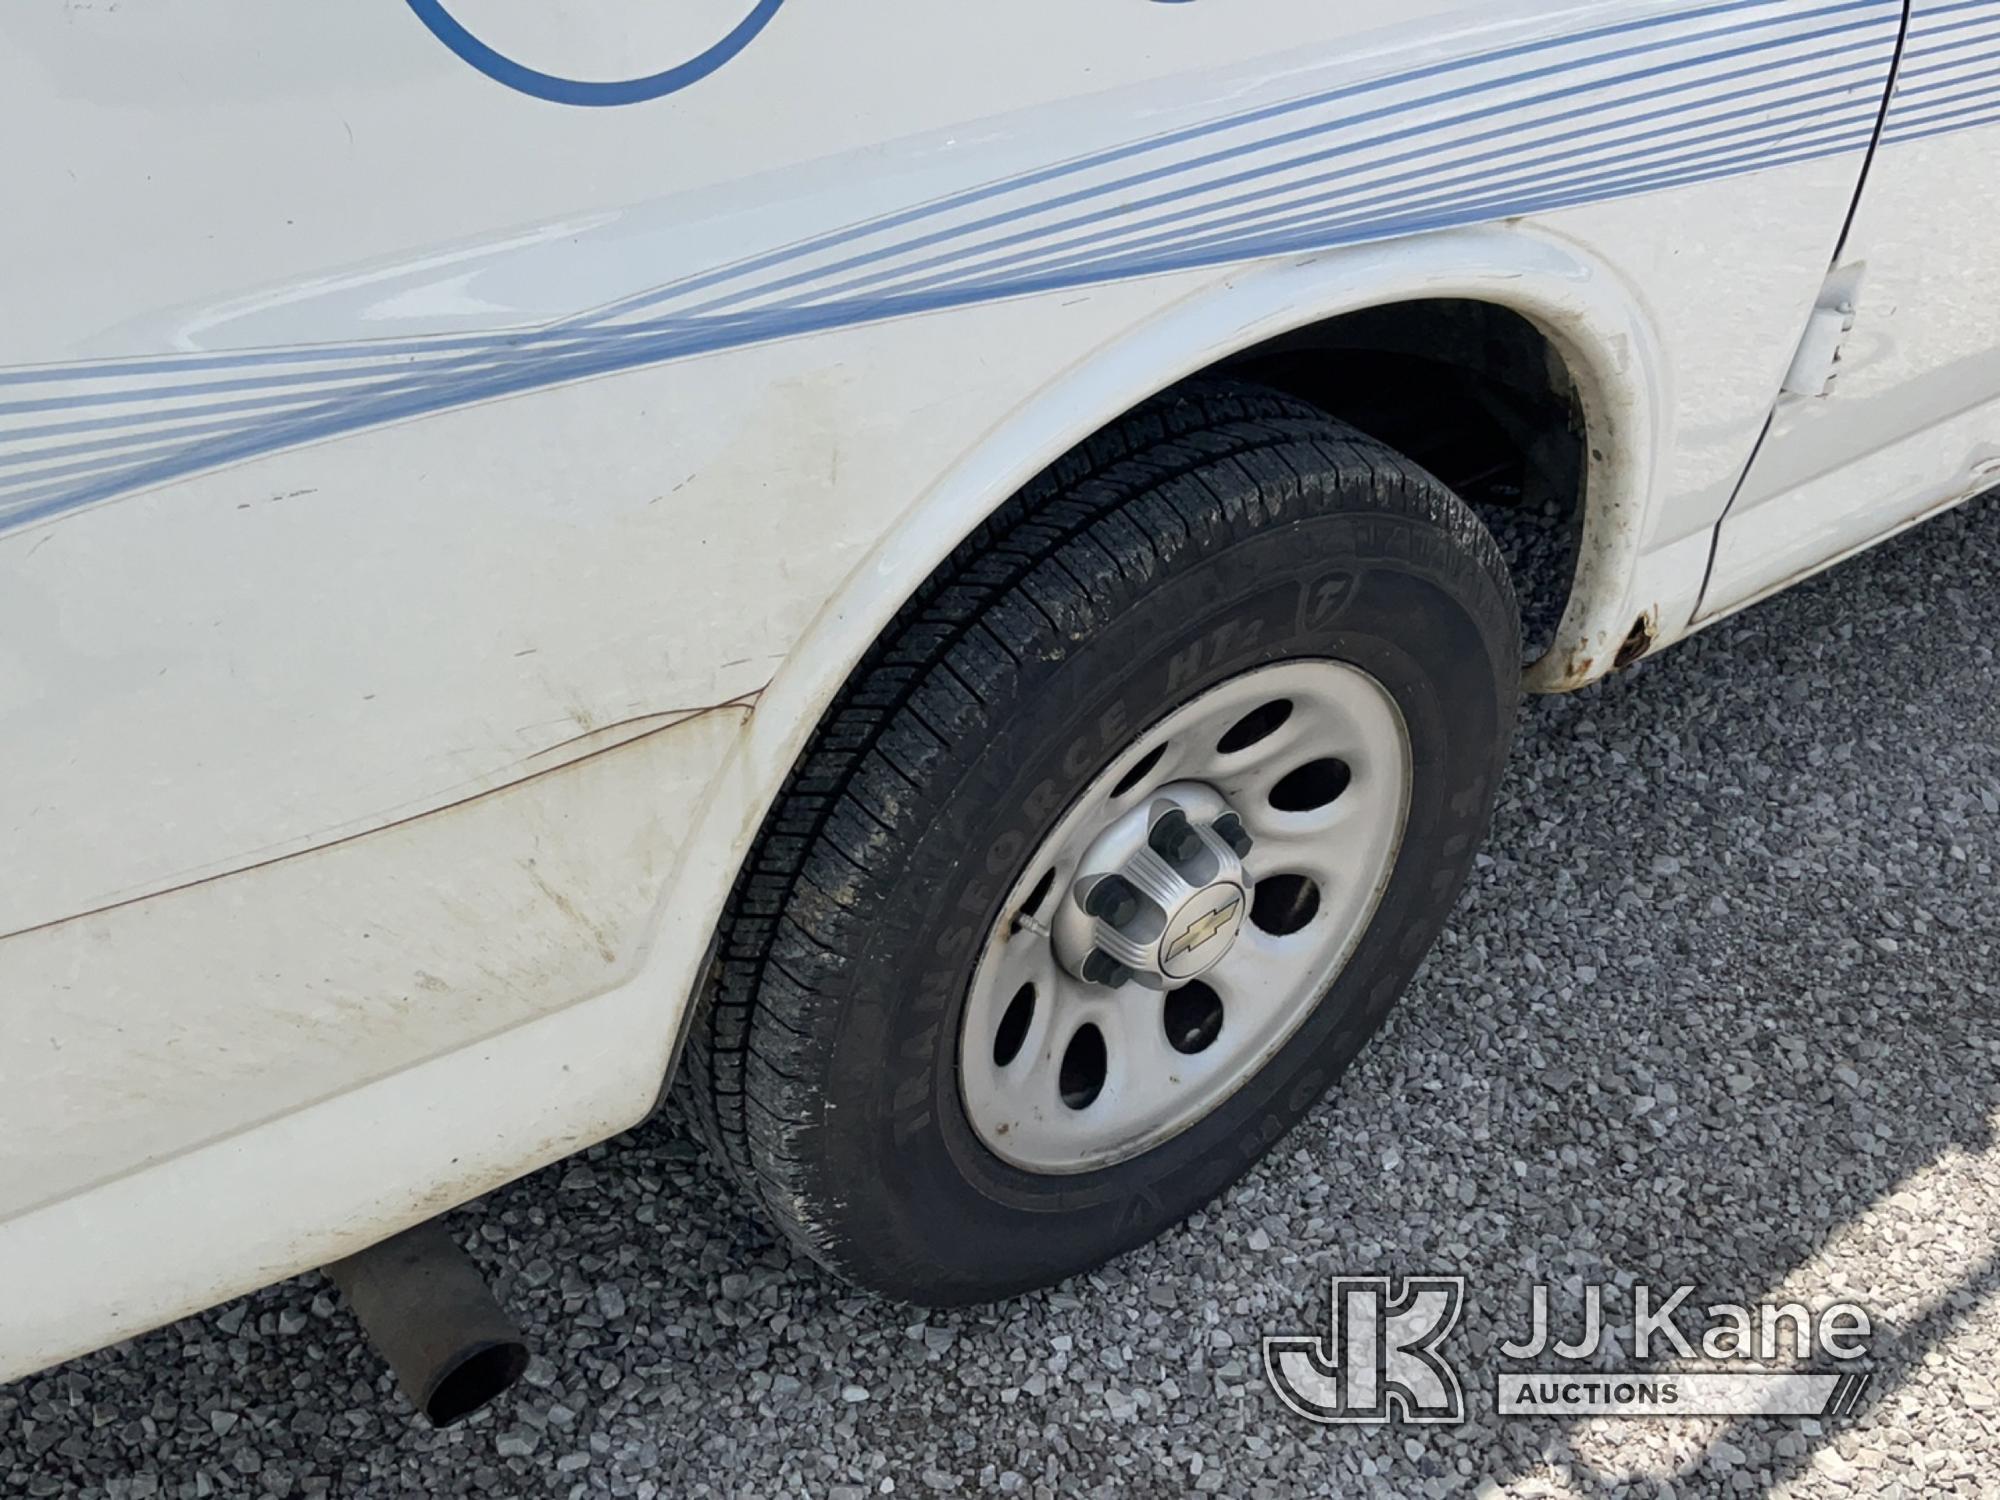 (Verona, KY) 2012 Chevrolet Express G1500 Cargo Van Runs & Moves) (Rust, Body & Paint Damage